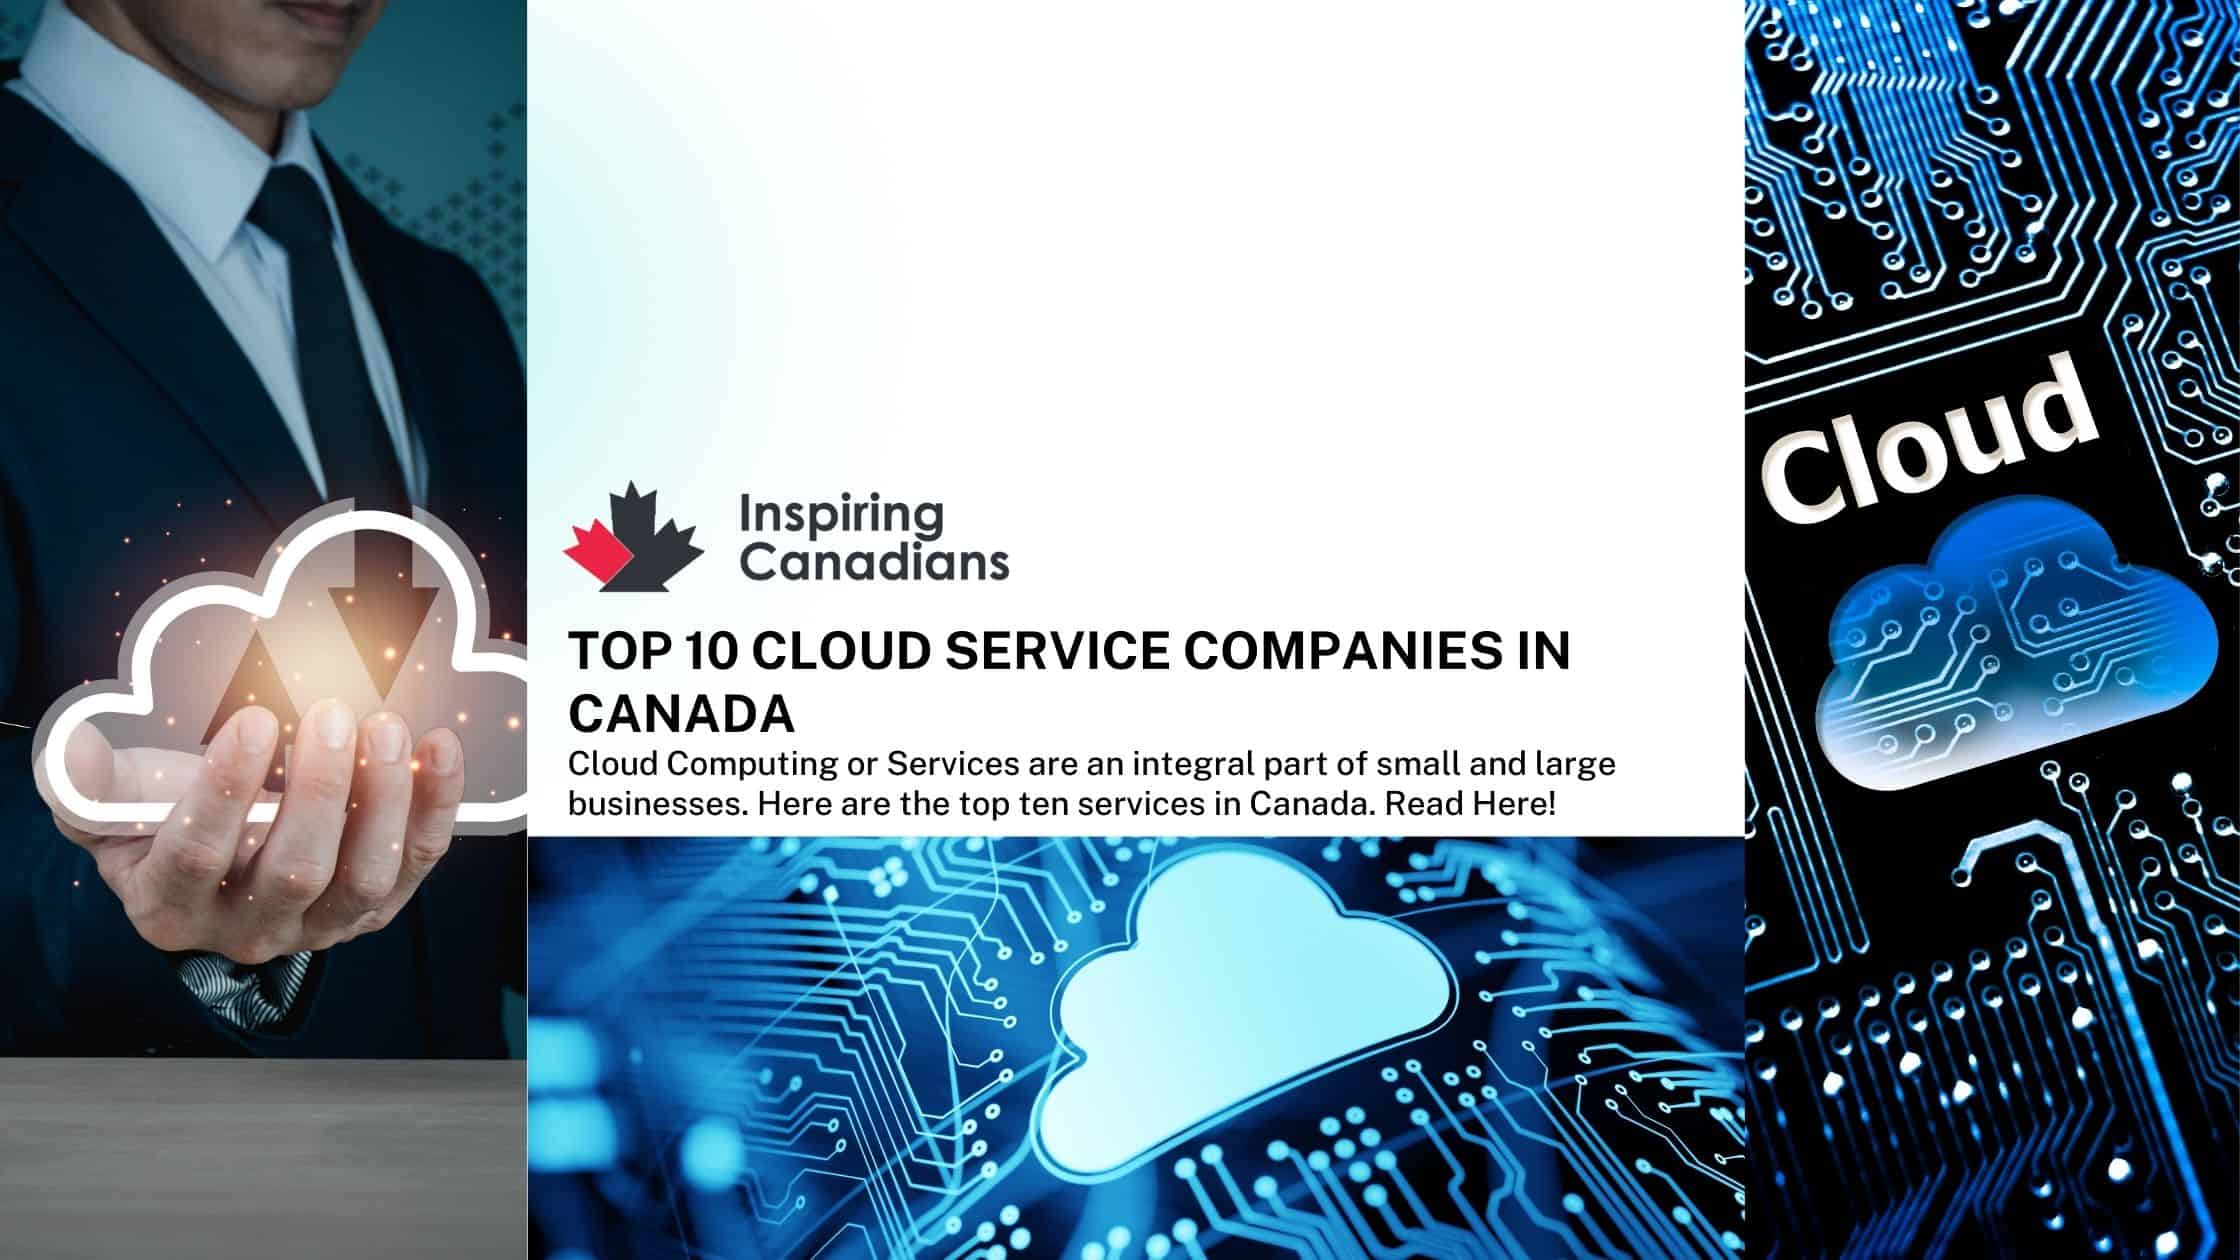 Top 10 cloud service companies in Canada